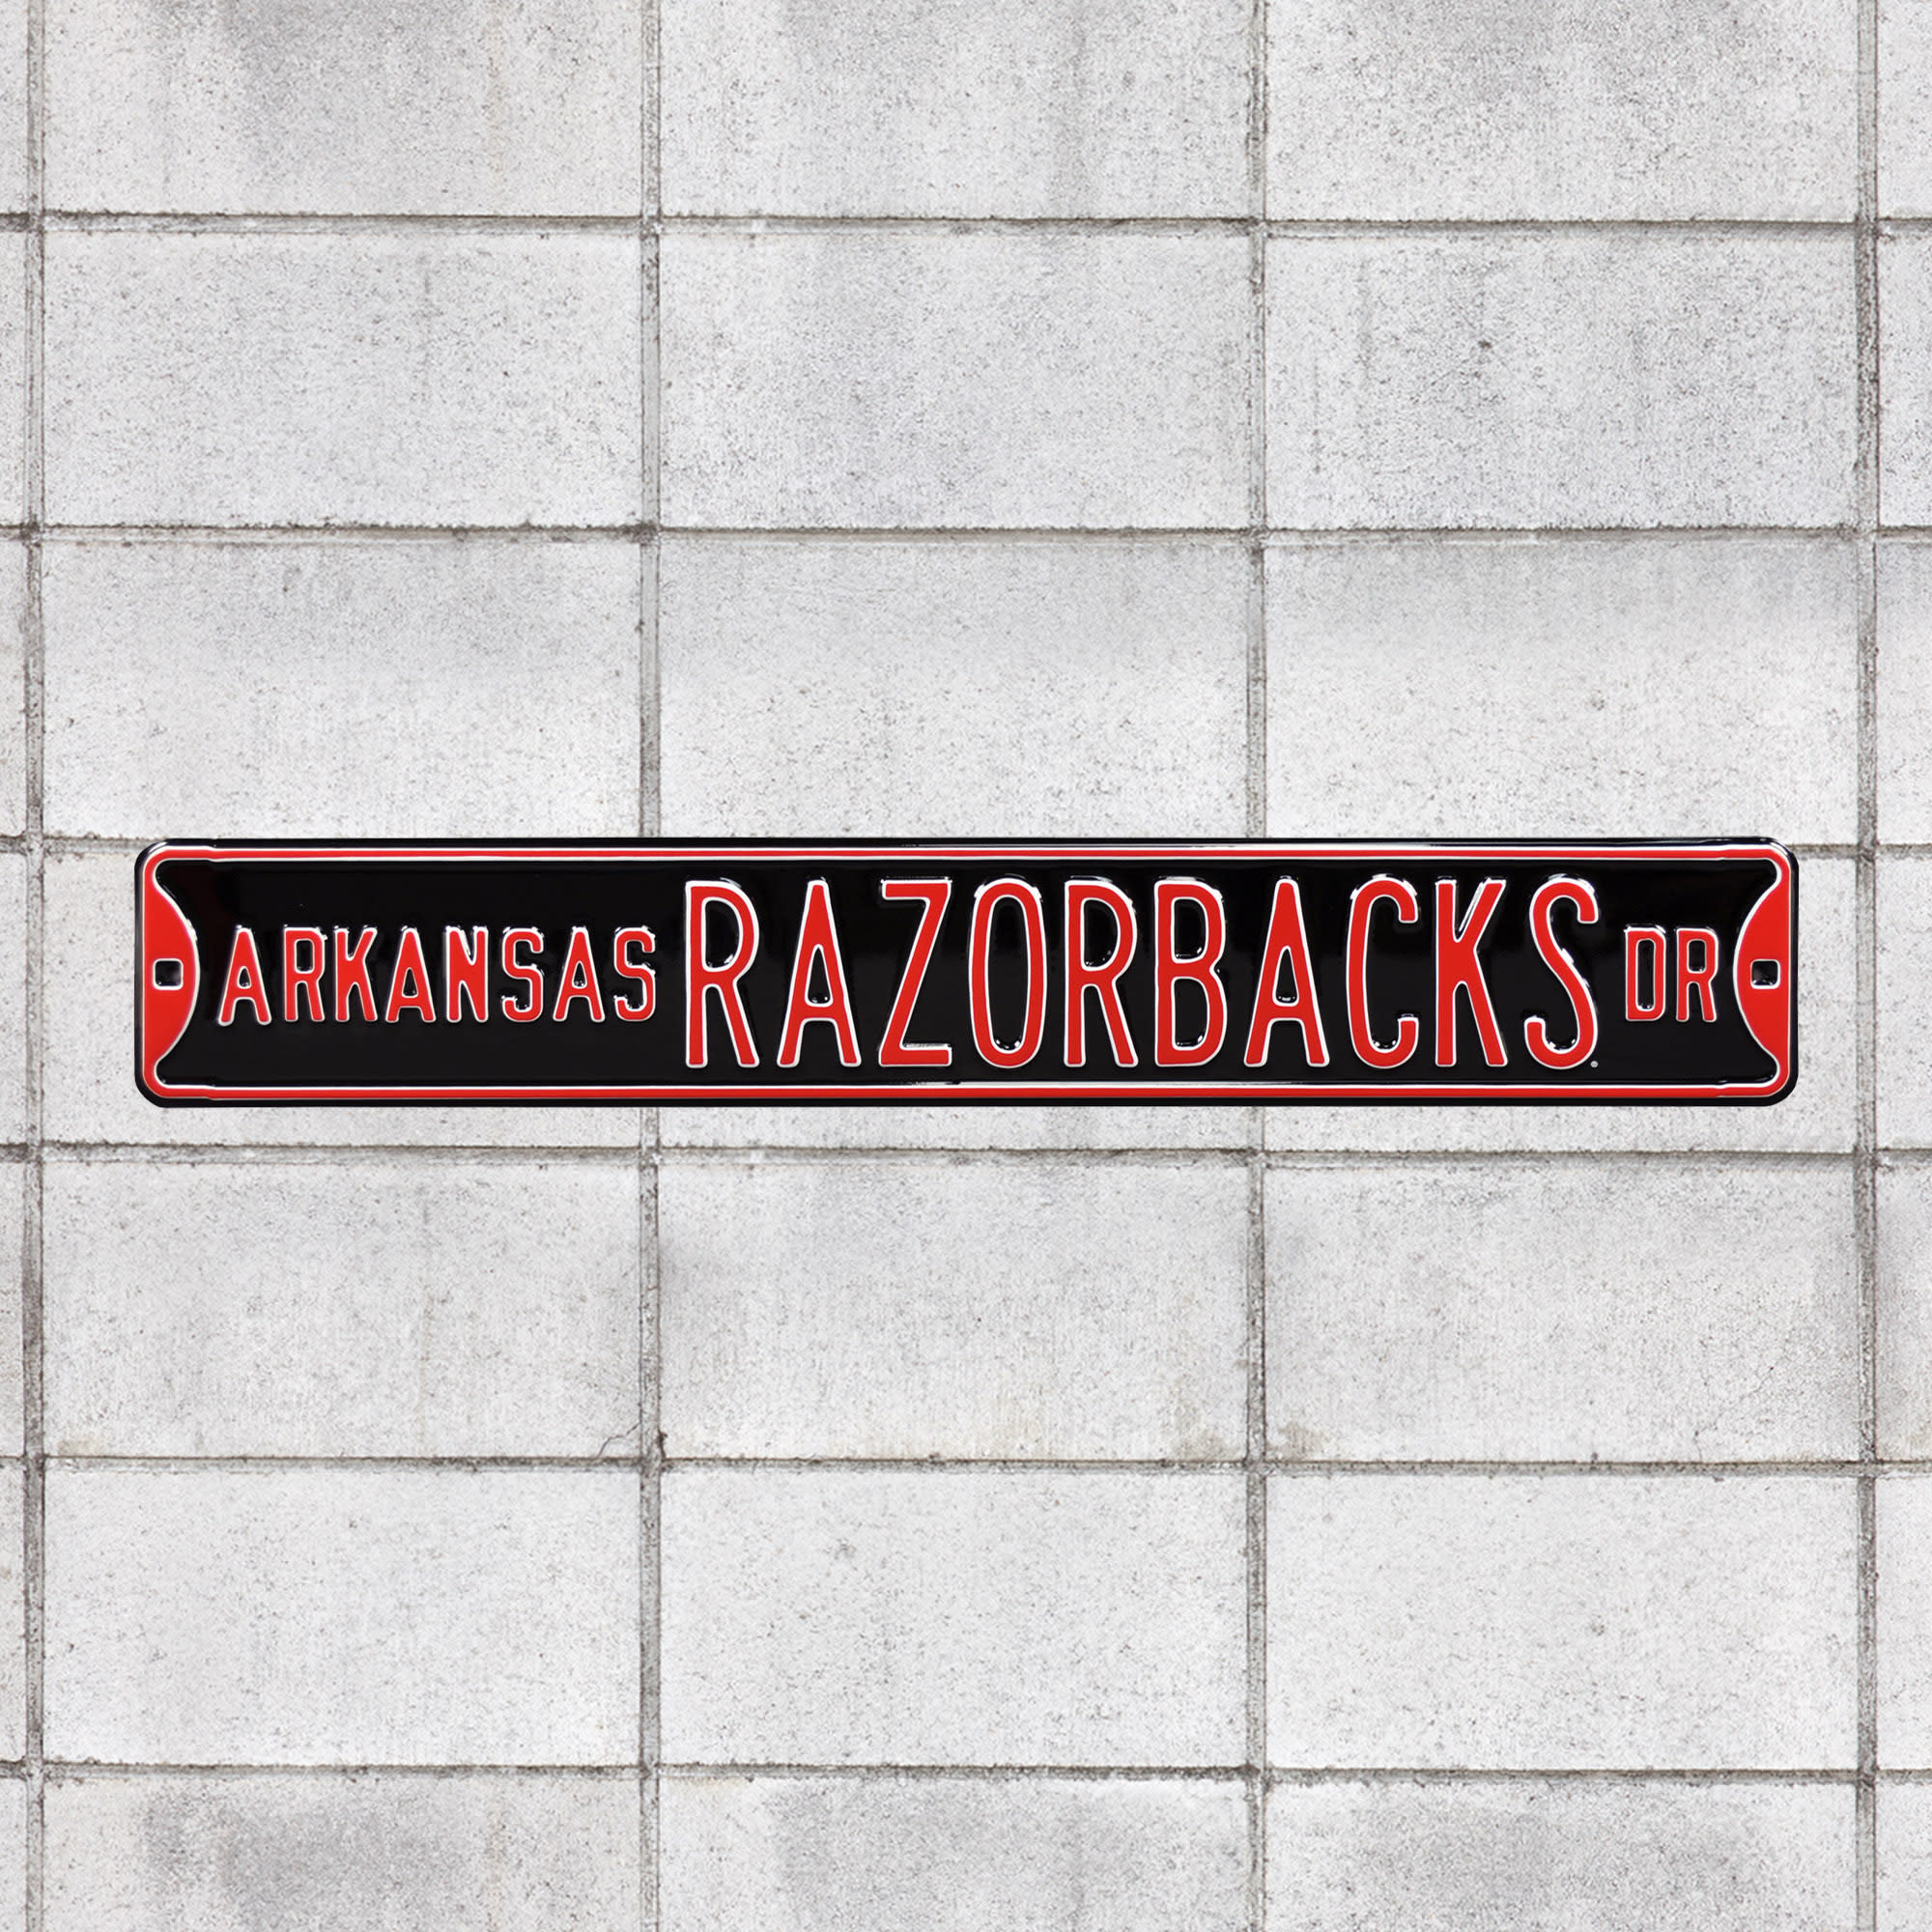 Arkansas Razorbacks: Razonback Drive - Officially Licensed Metal Street Sign 36.0"W x 6.0"H by Fathead | 100% Steel